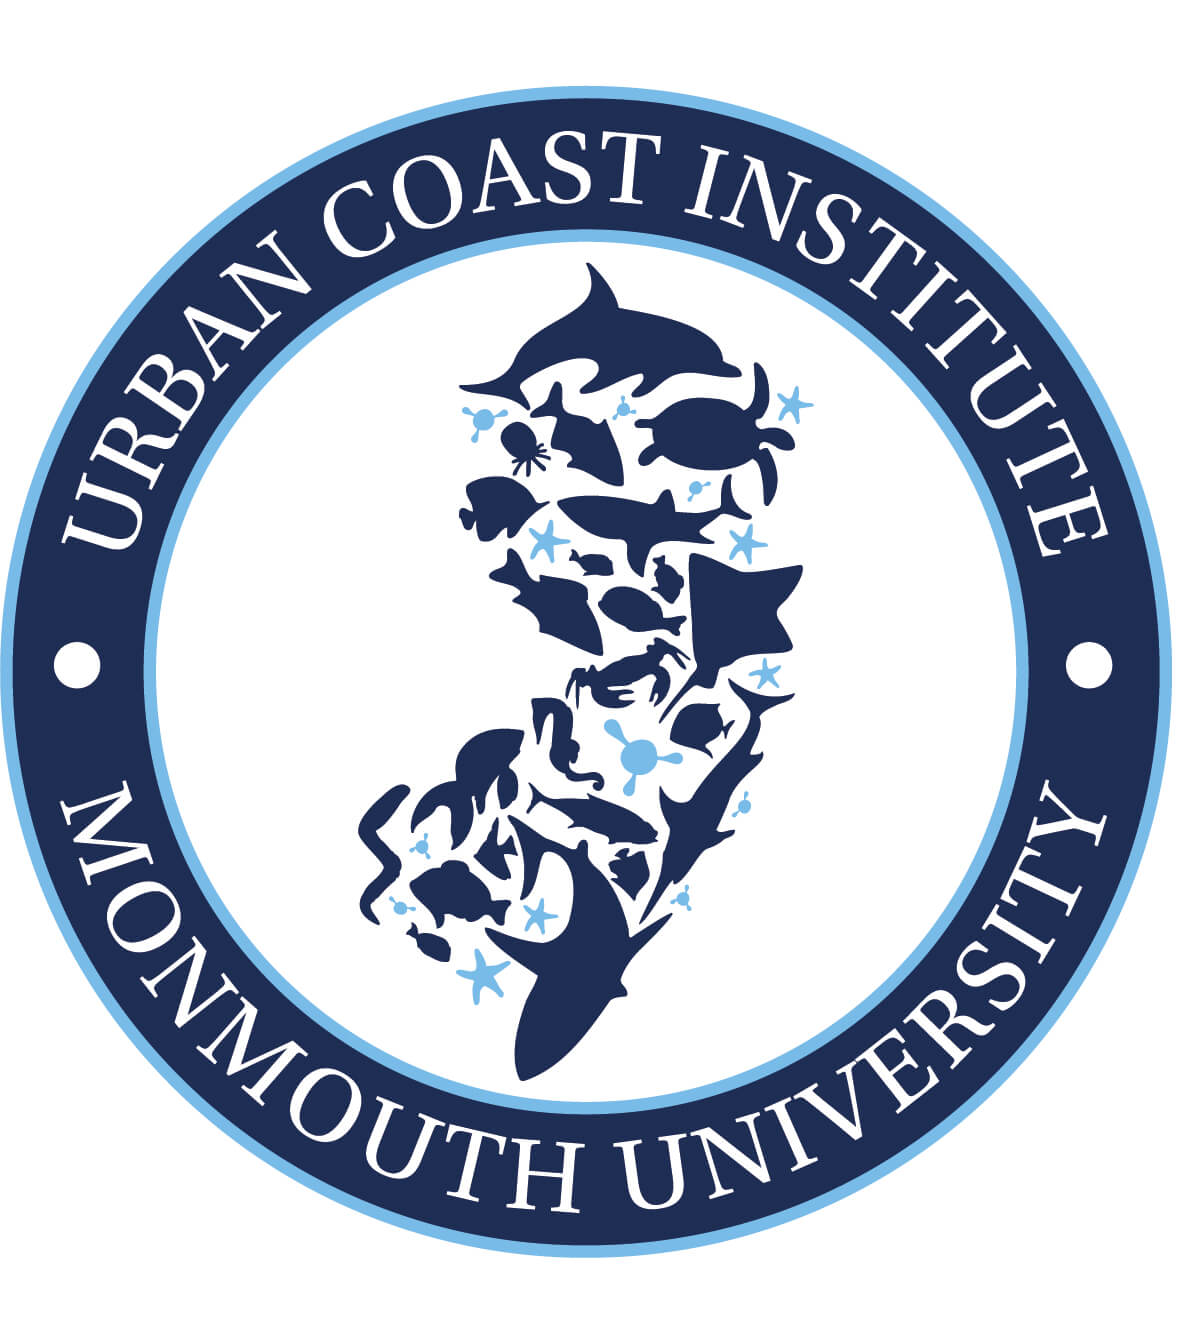 The Monmouth University Urban Coast Institute logo.